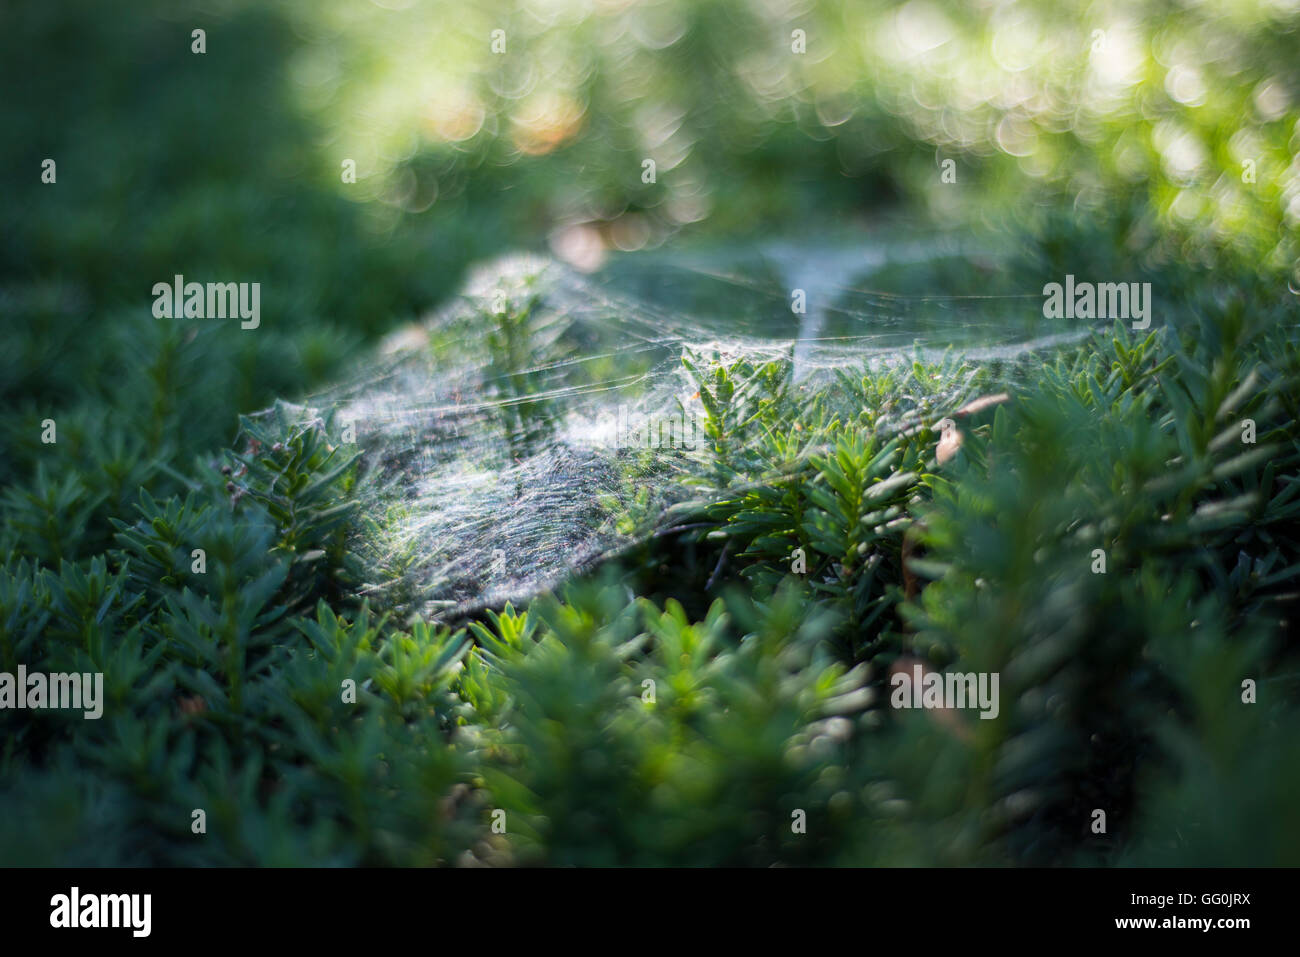 A web covers a green bush. Stock Photo